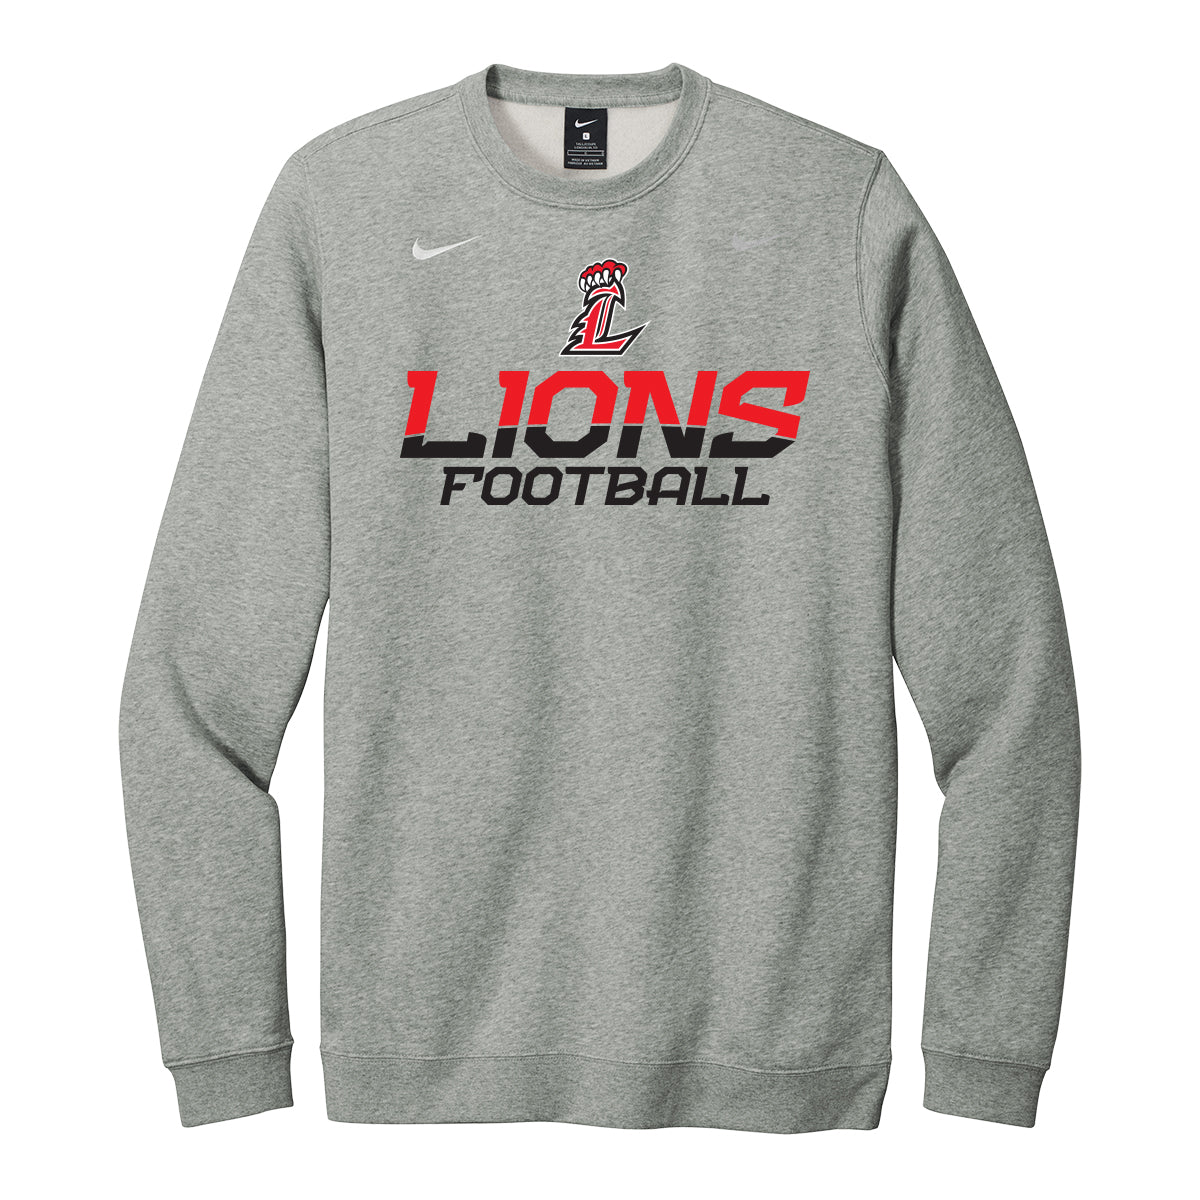 Lions Football (two color) Nike Crewneck Sweatshirt